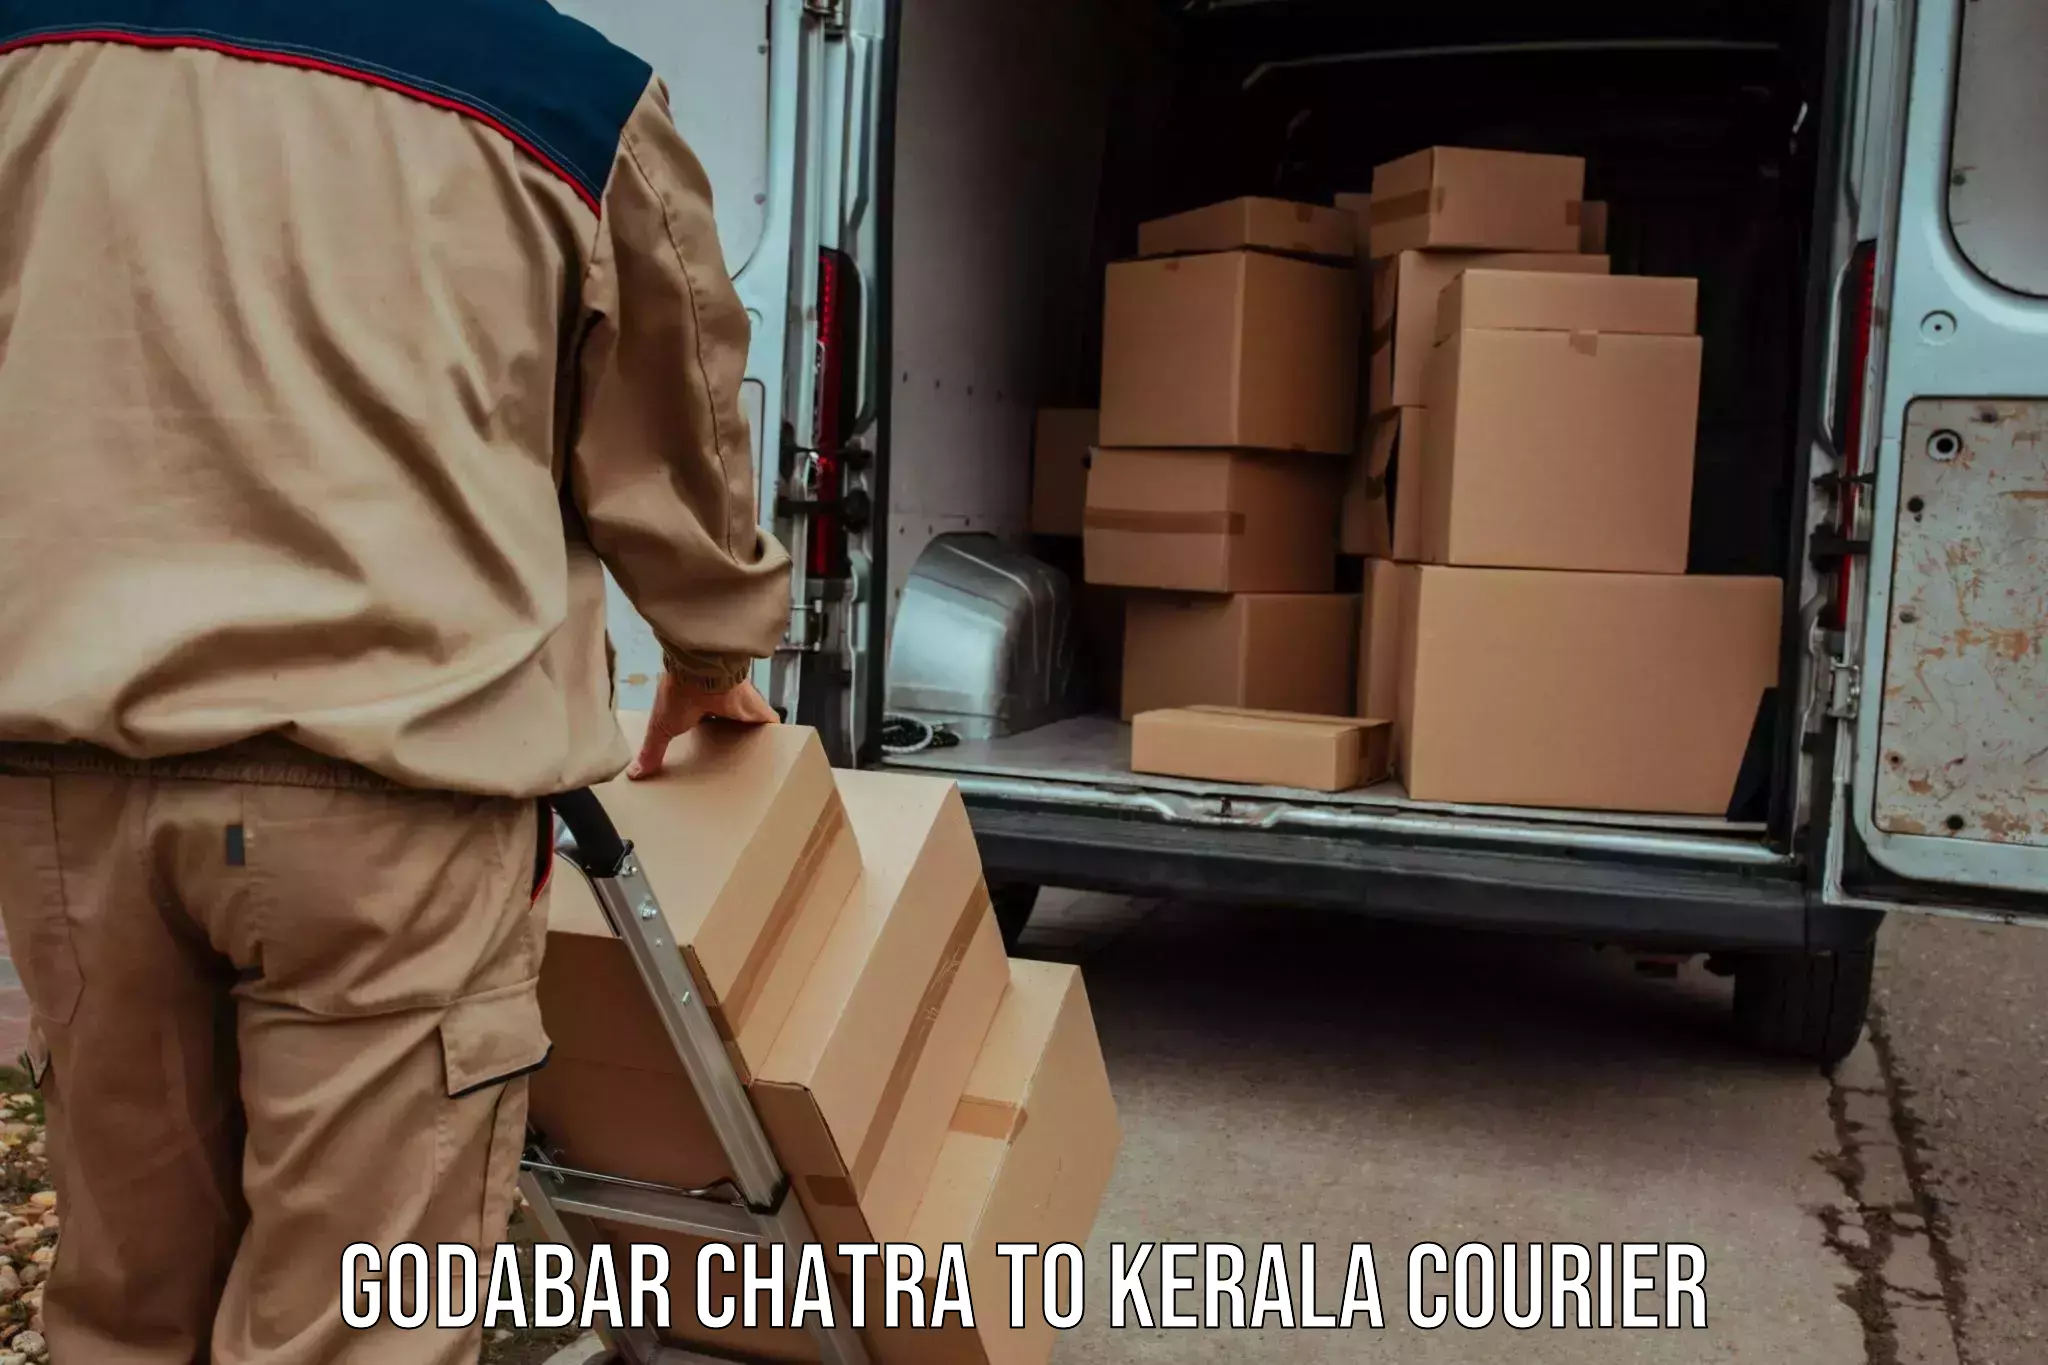 Global courier networks Godabar Chatra to Kozhikode